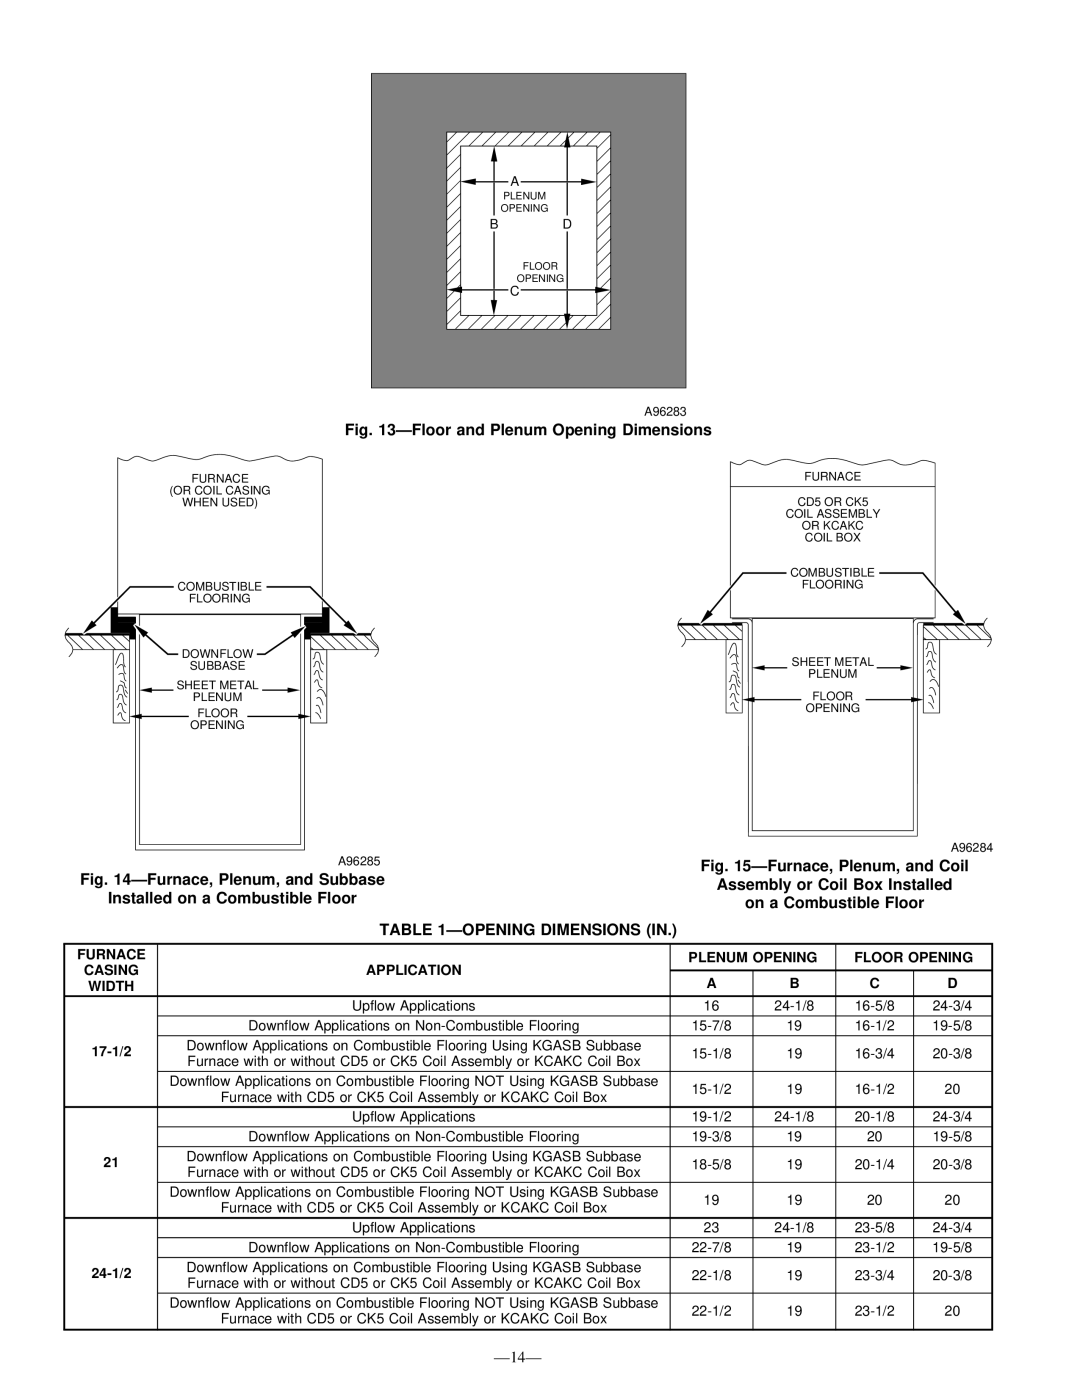 Bryant 340MAV instruction manual Ðopening Dimensions, Furnace Plenum Opening Floor Opening Casing, Width 